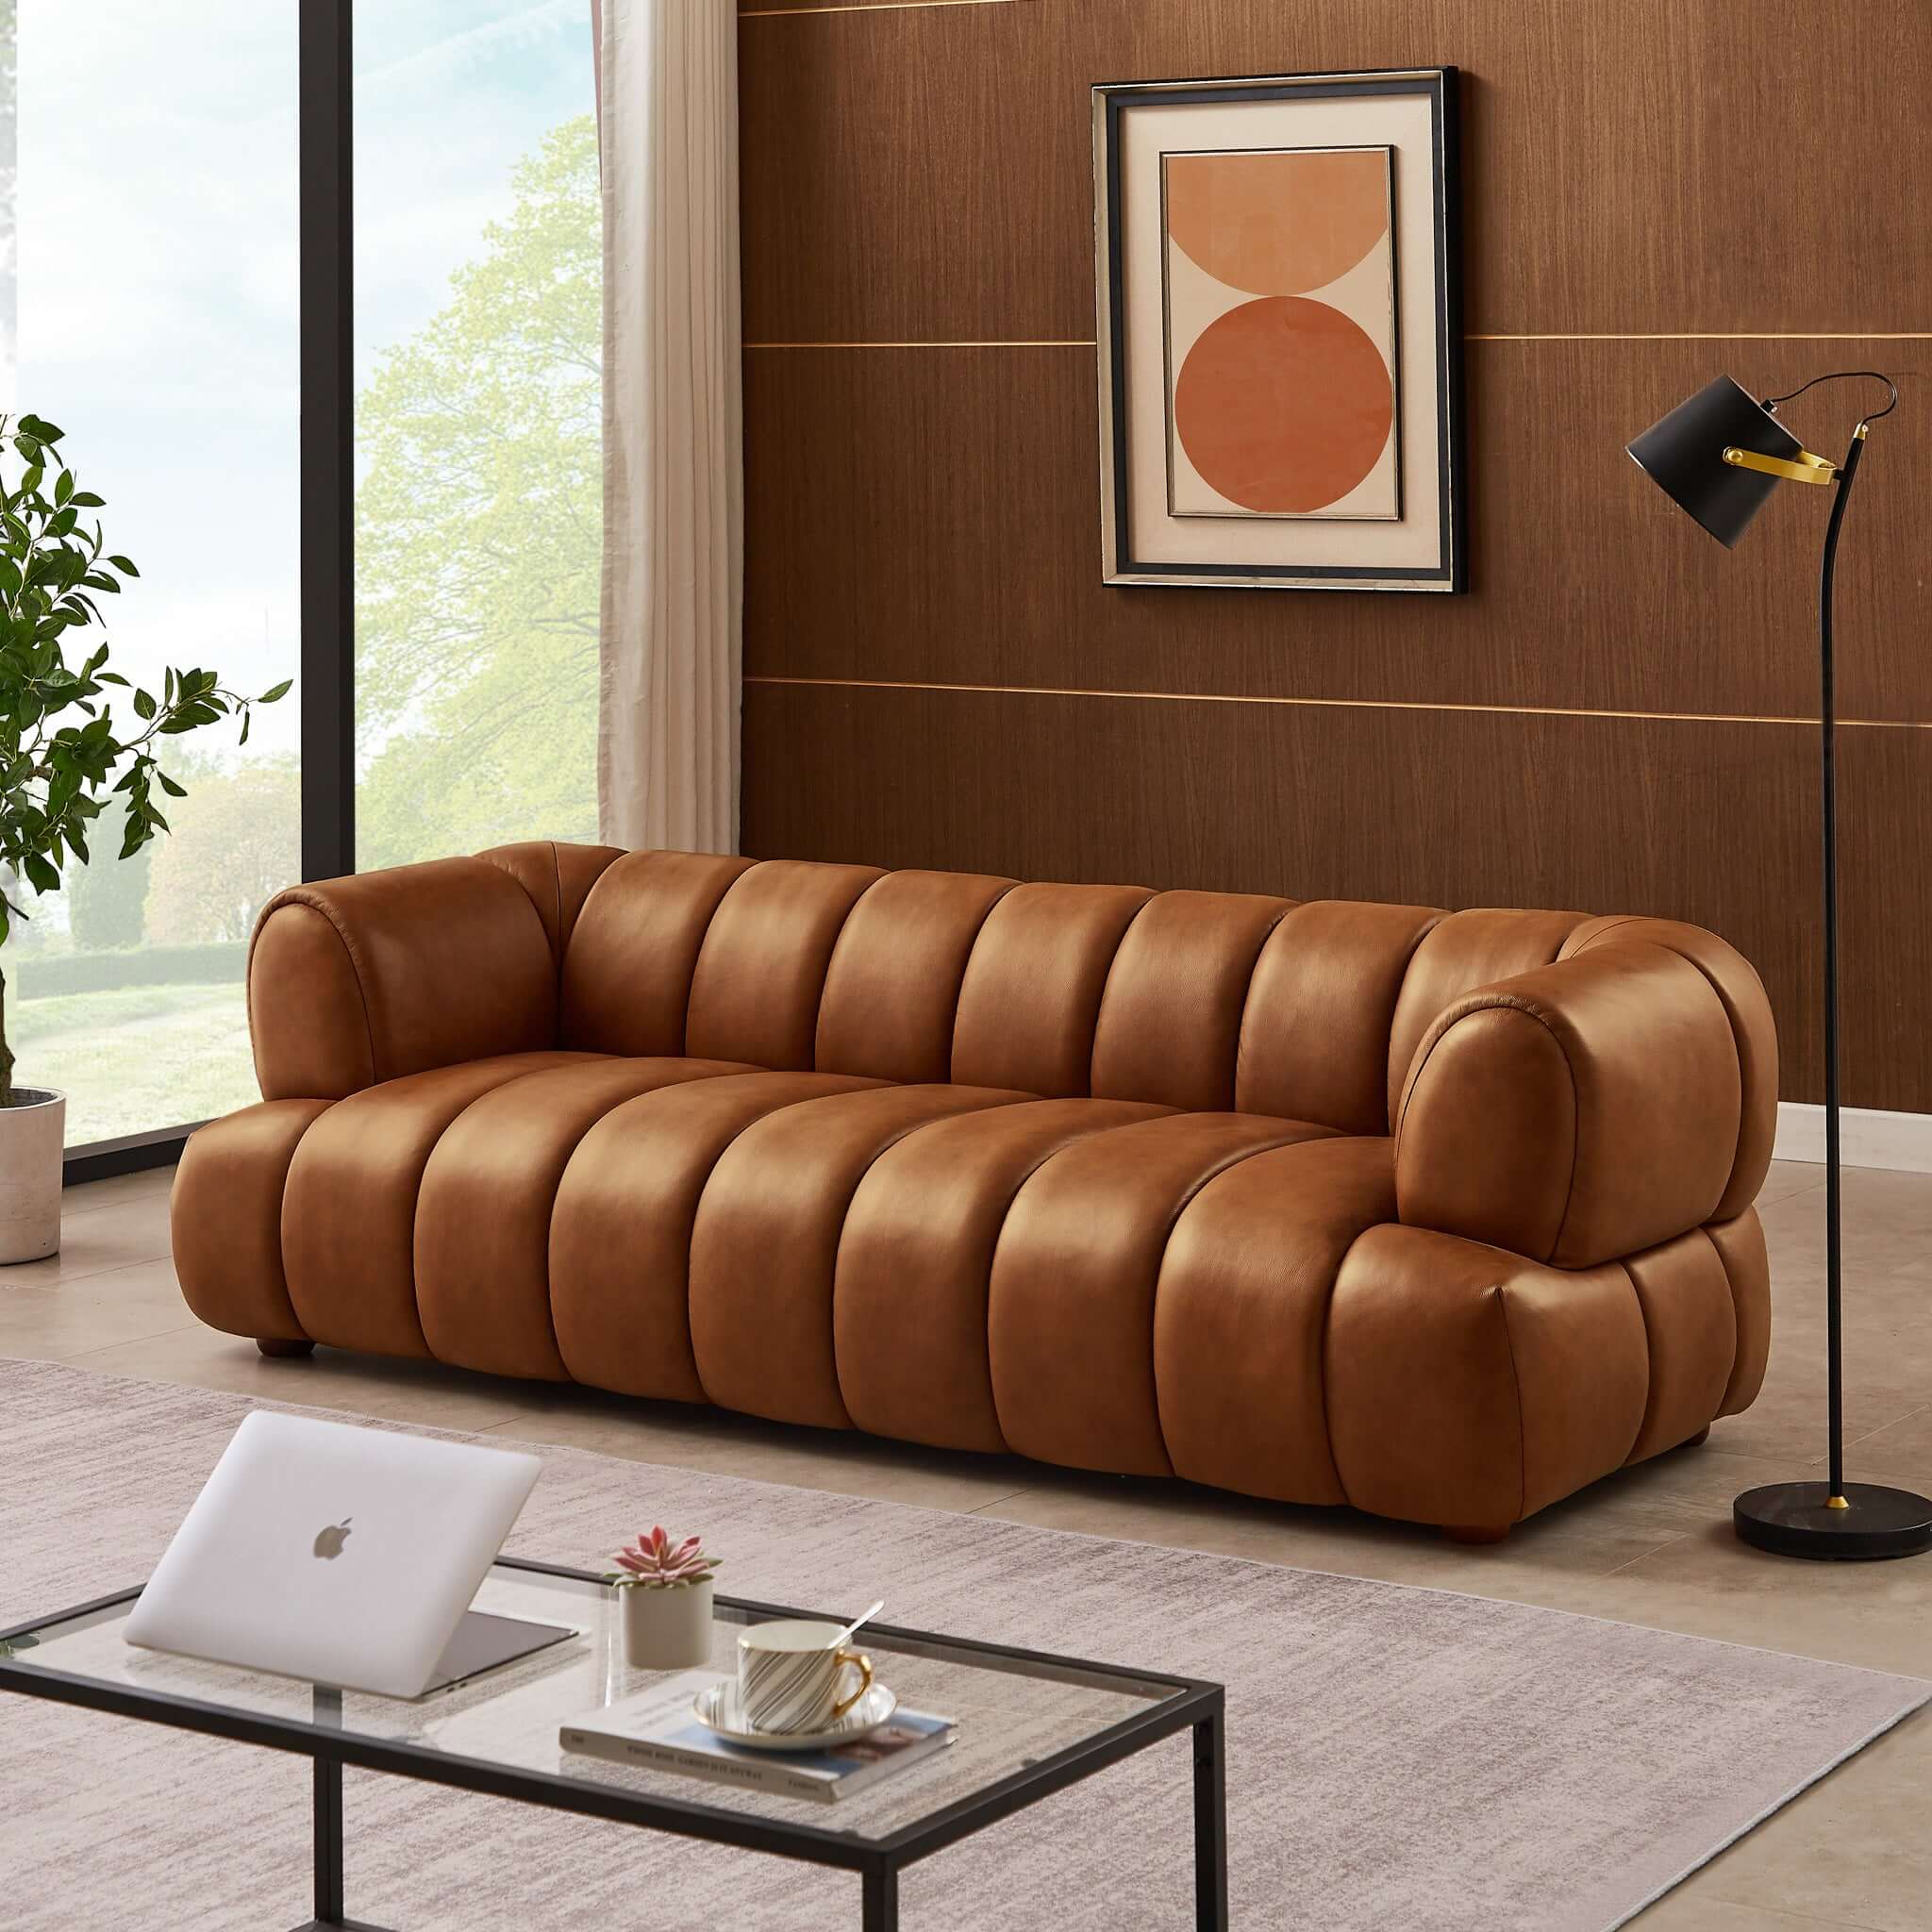 Dorien Leather Sofa